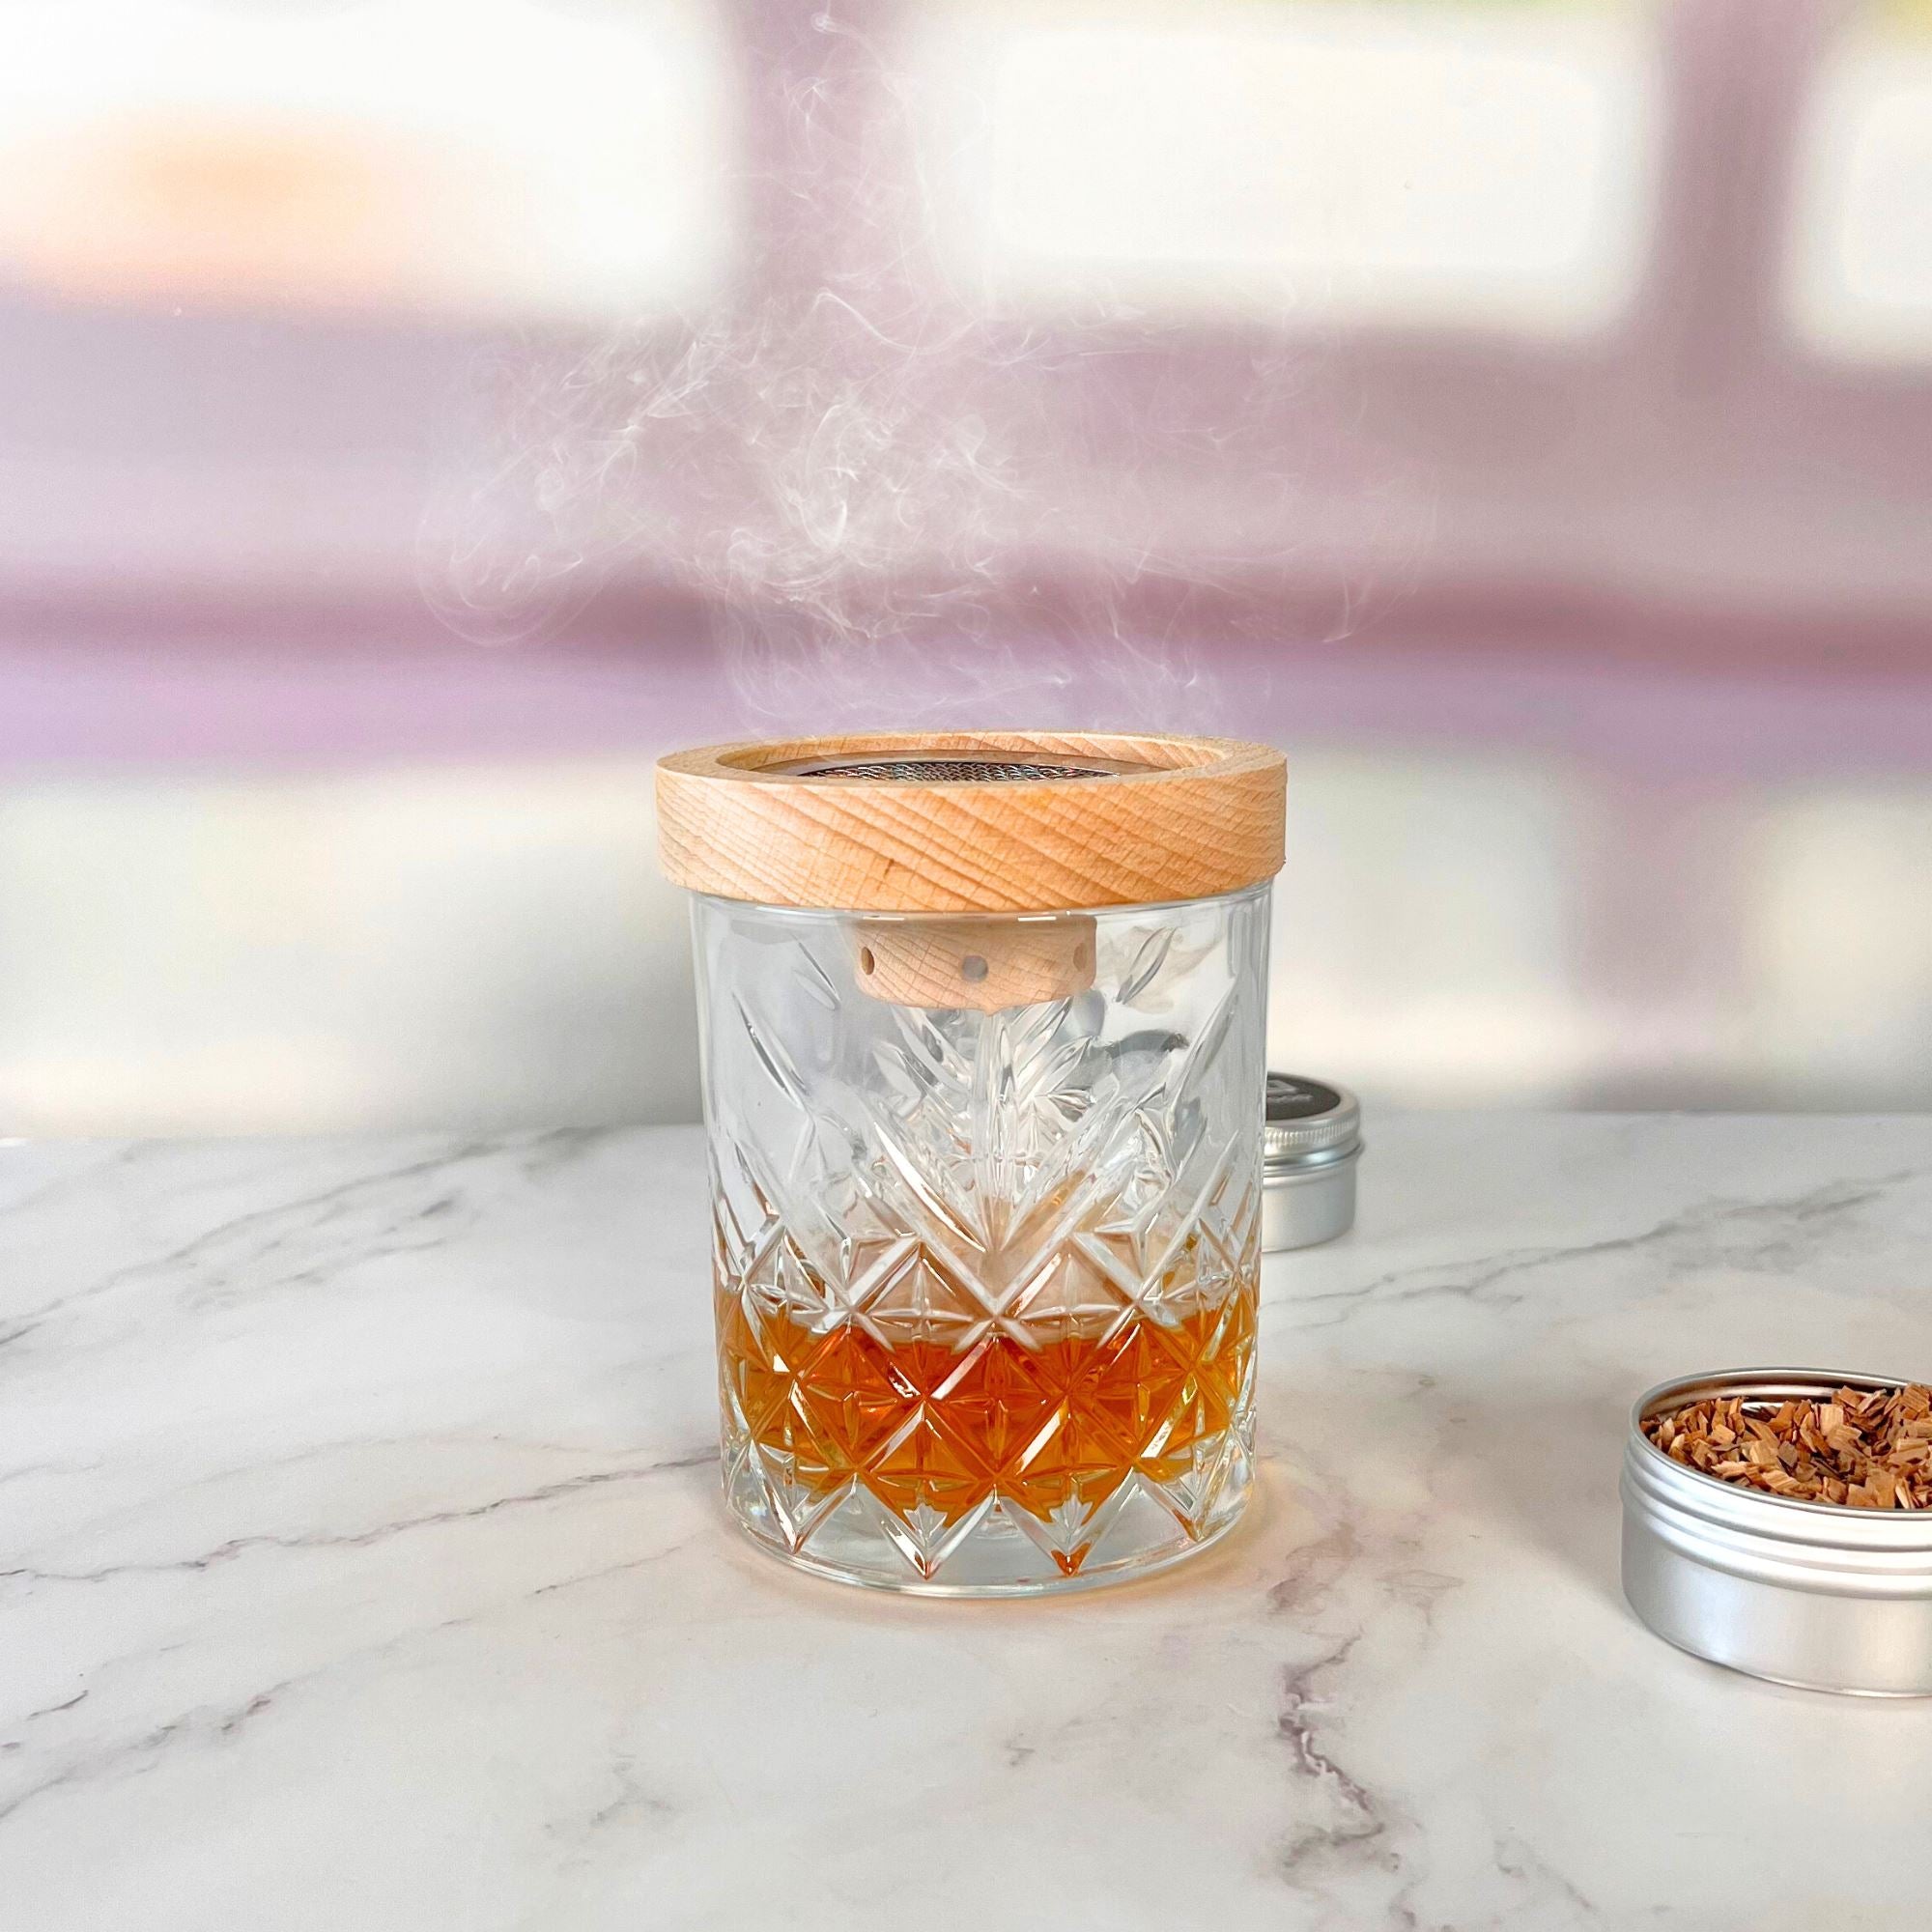 Ultimate Smoked Cocktail Kit Barware D-STILL Drinkware 